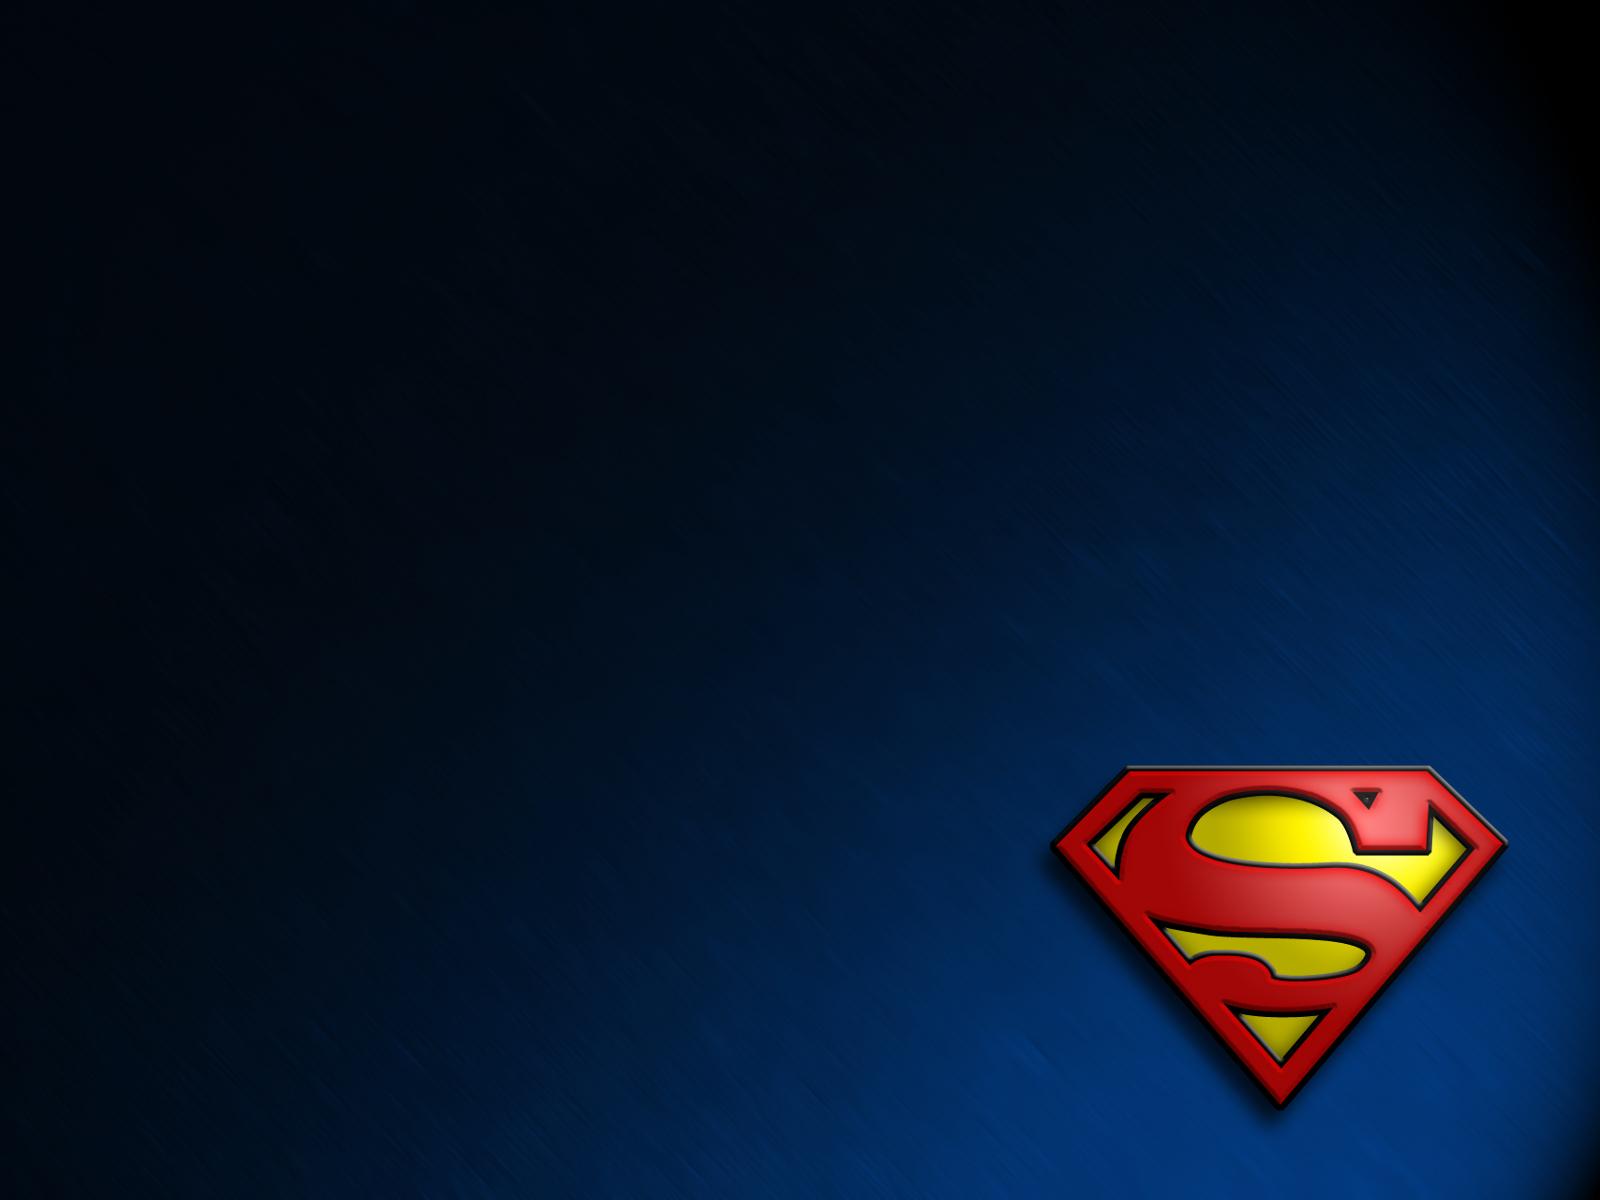 http://1.bp.blogspot.com/-fsnTyoKmFMU/TZnGcBVL41I/AAAAAAAAGk4/mqulC-2pmz4/s1600/Superman-achtergronden-hd-superman-wallpapers-afbeelding-18.jpg